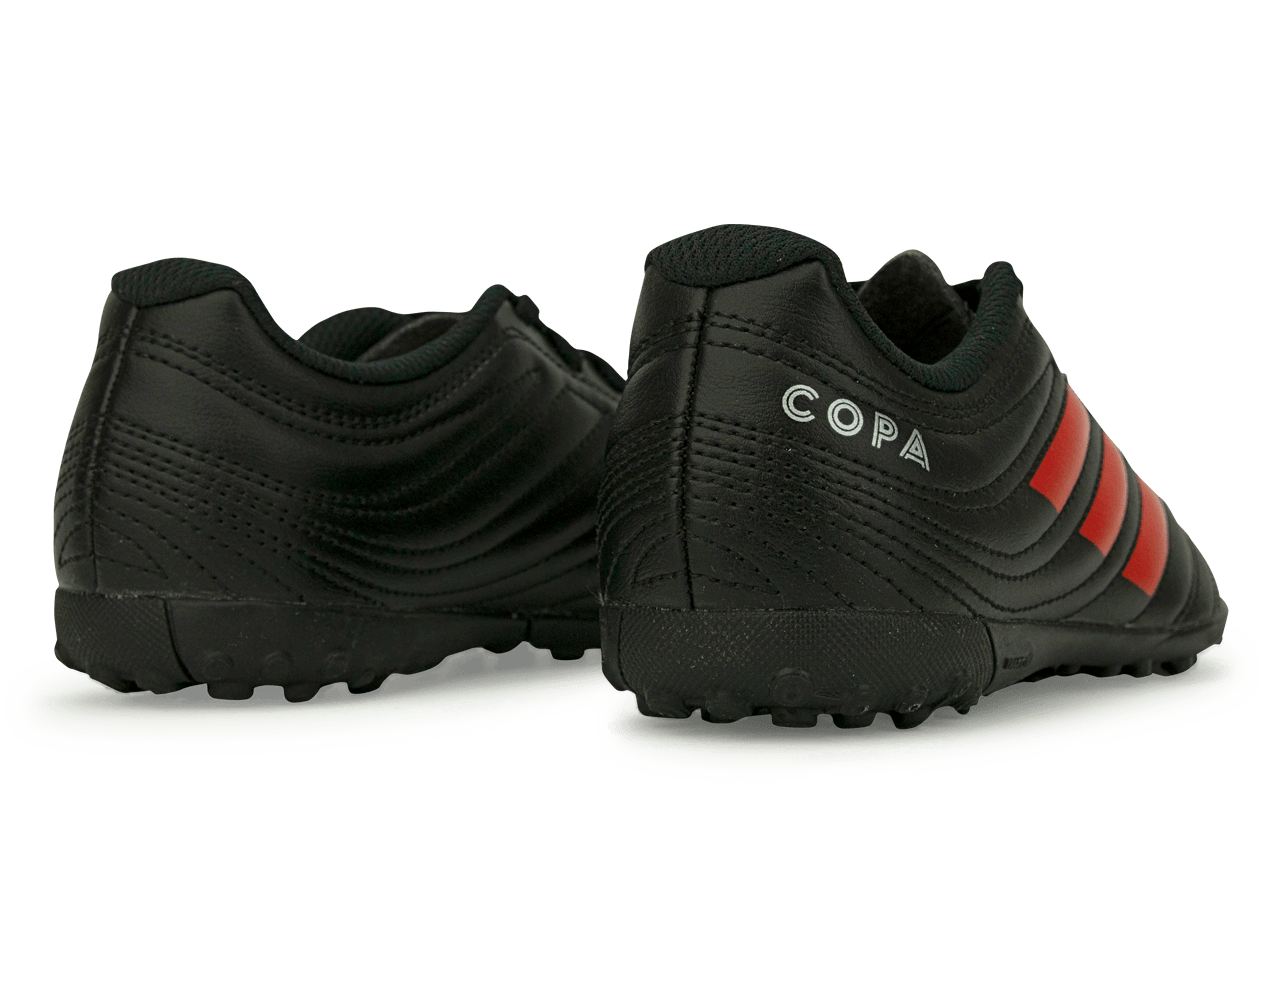 adidas Kids Copa 19.4 Turf Shoes Core Black/Hi-Res Red/Silver Metallic